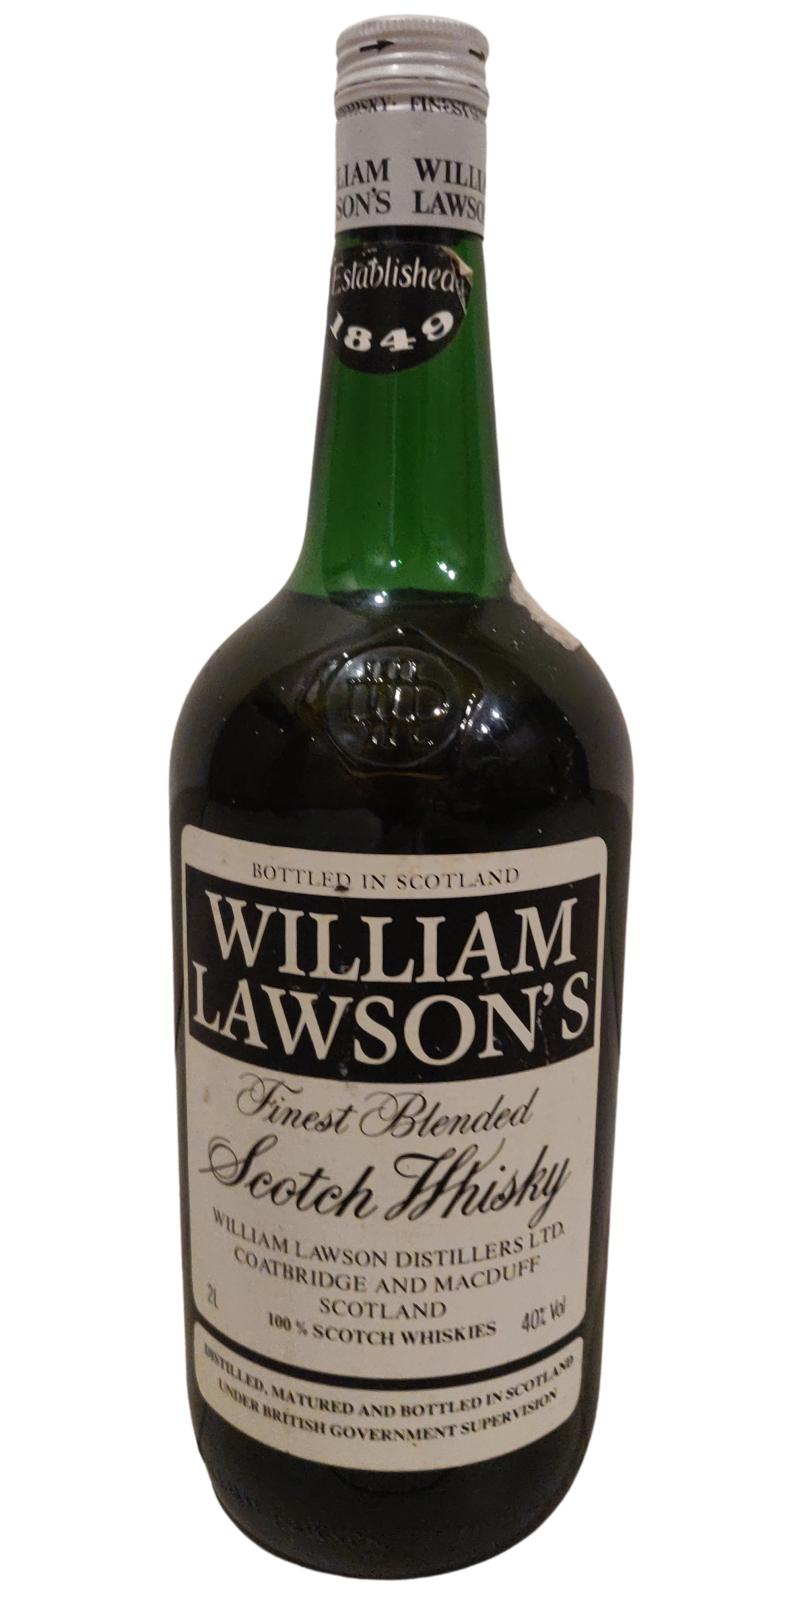 William lawson 0.5. William Lawson's. Красная этикетка на виски William Lawson's. Высота бутылки William Lawson's. Lliam Lawson’s Finest Blend.